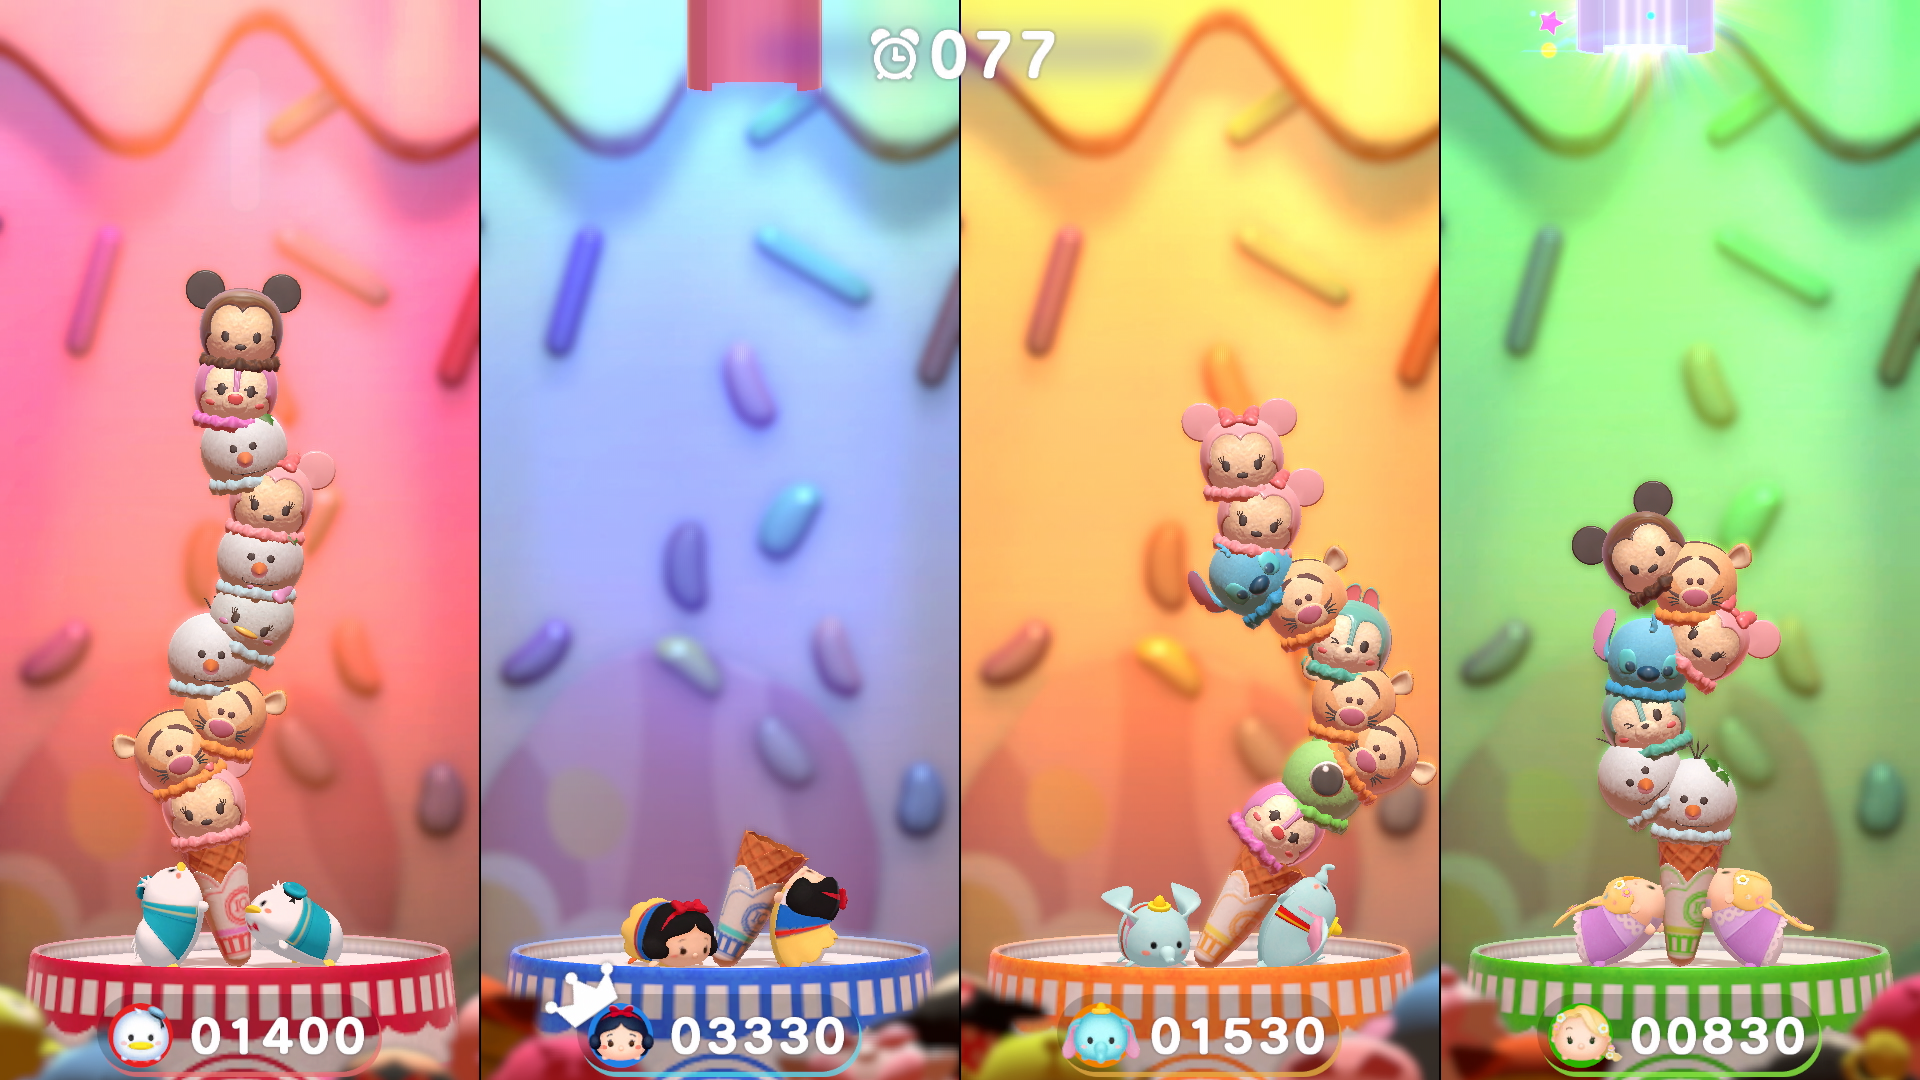 Disney Tsum Tsum Festival Nintendo Switch - HD Wallpaper 